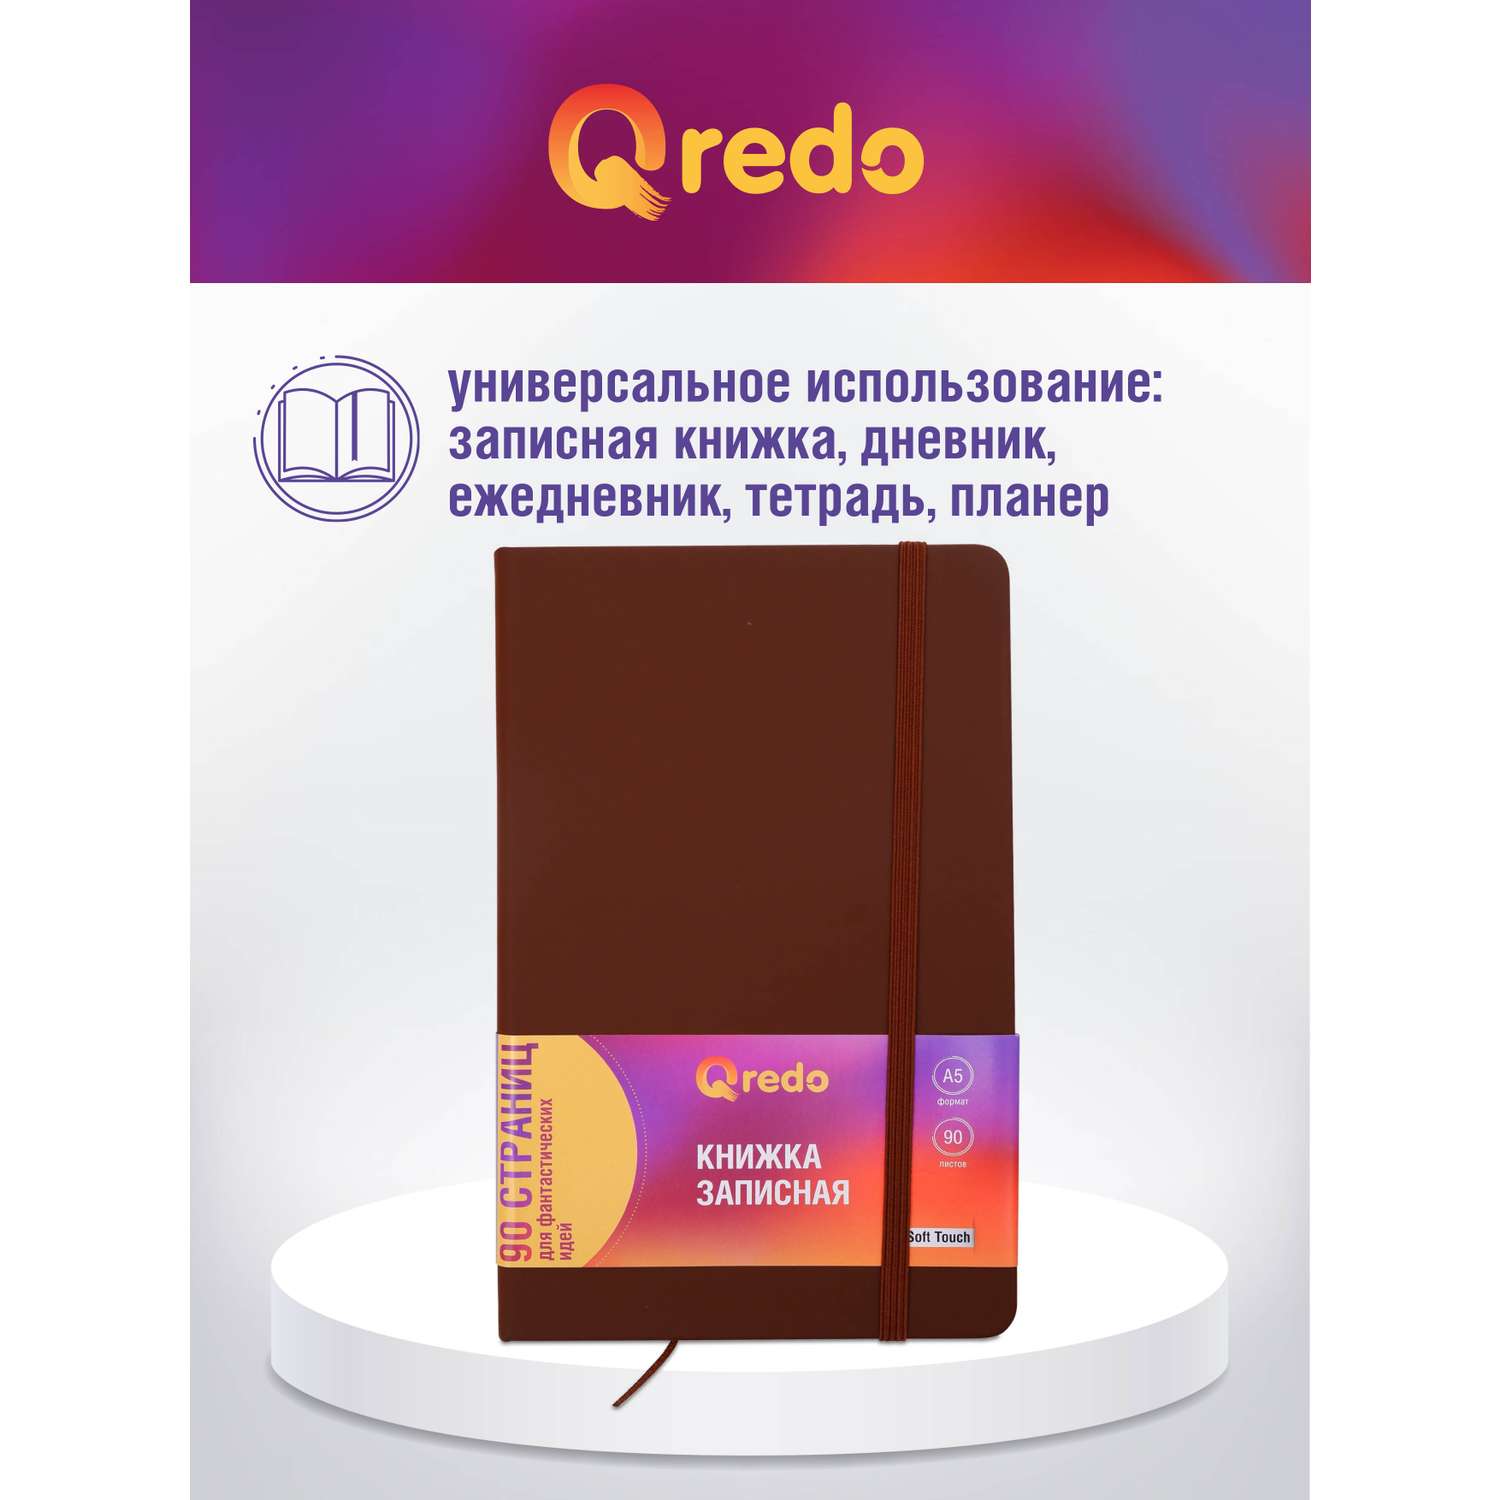 Записная книжка Qredo в клетку А5 90л Qredo коричневая обложка soft touch на резинке - фото 5